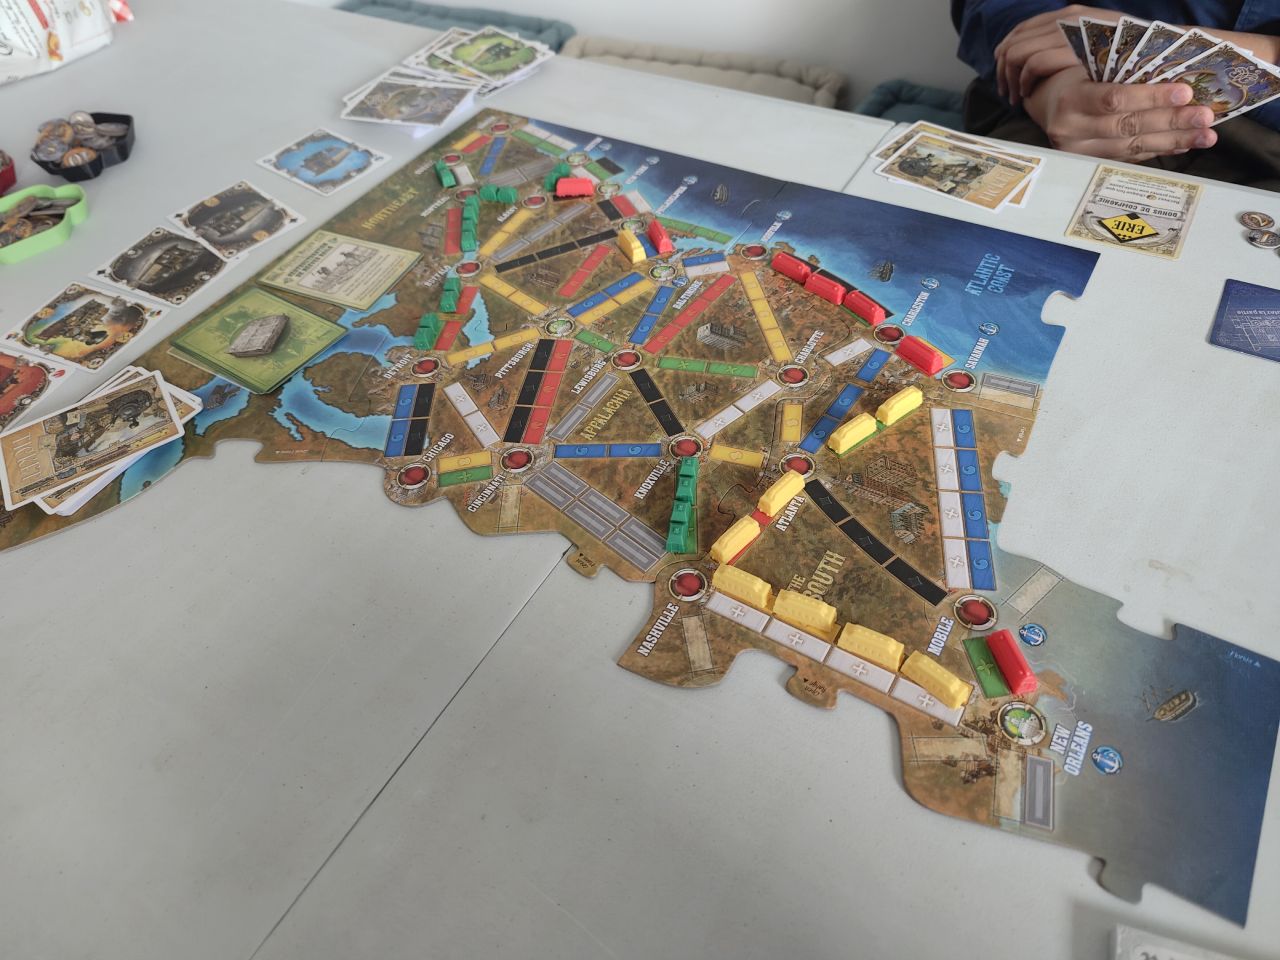 Les Aventuriers du Rail - Days of Wonder Board Game